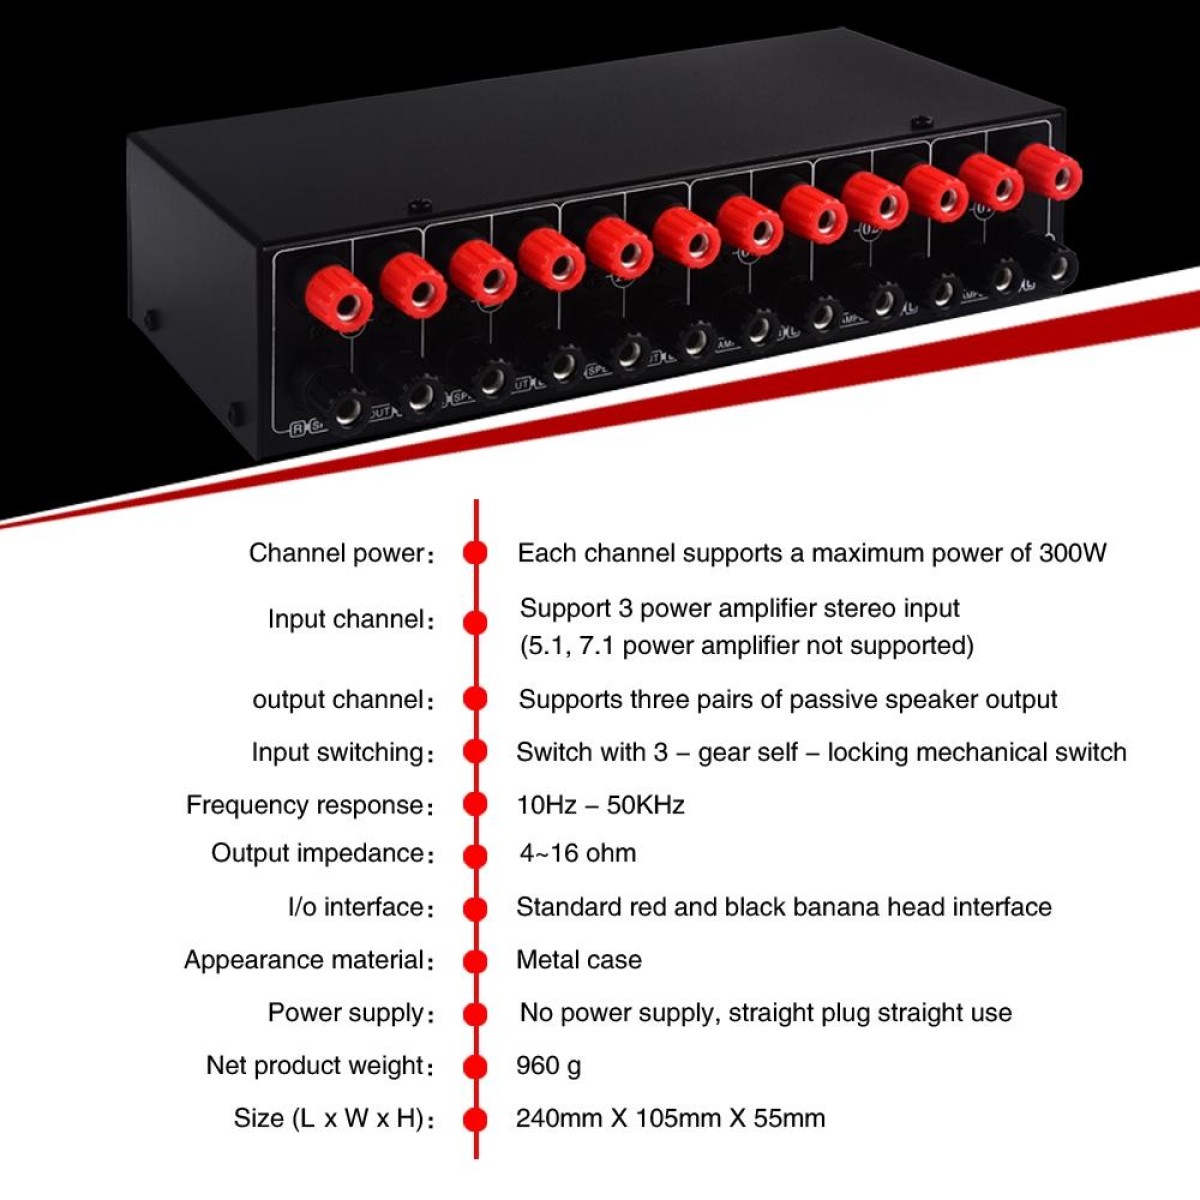 B036 3 Input 3 Output Power Amplifier And Speaker Switcher Speaker Switch Splitter Comparator